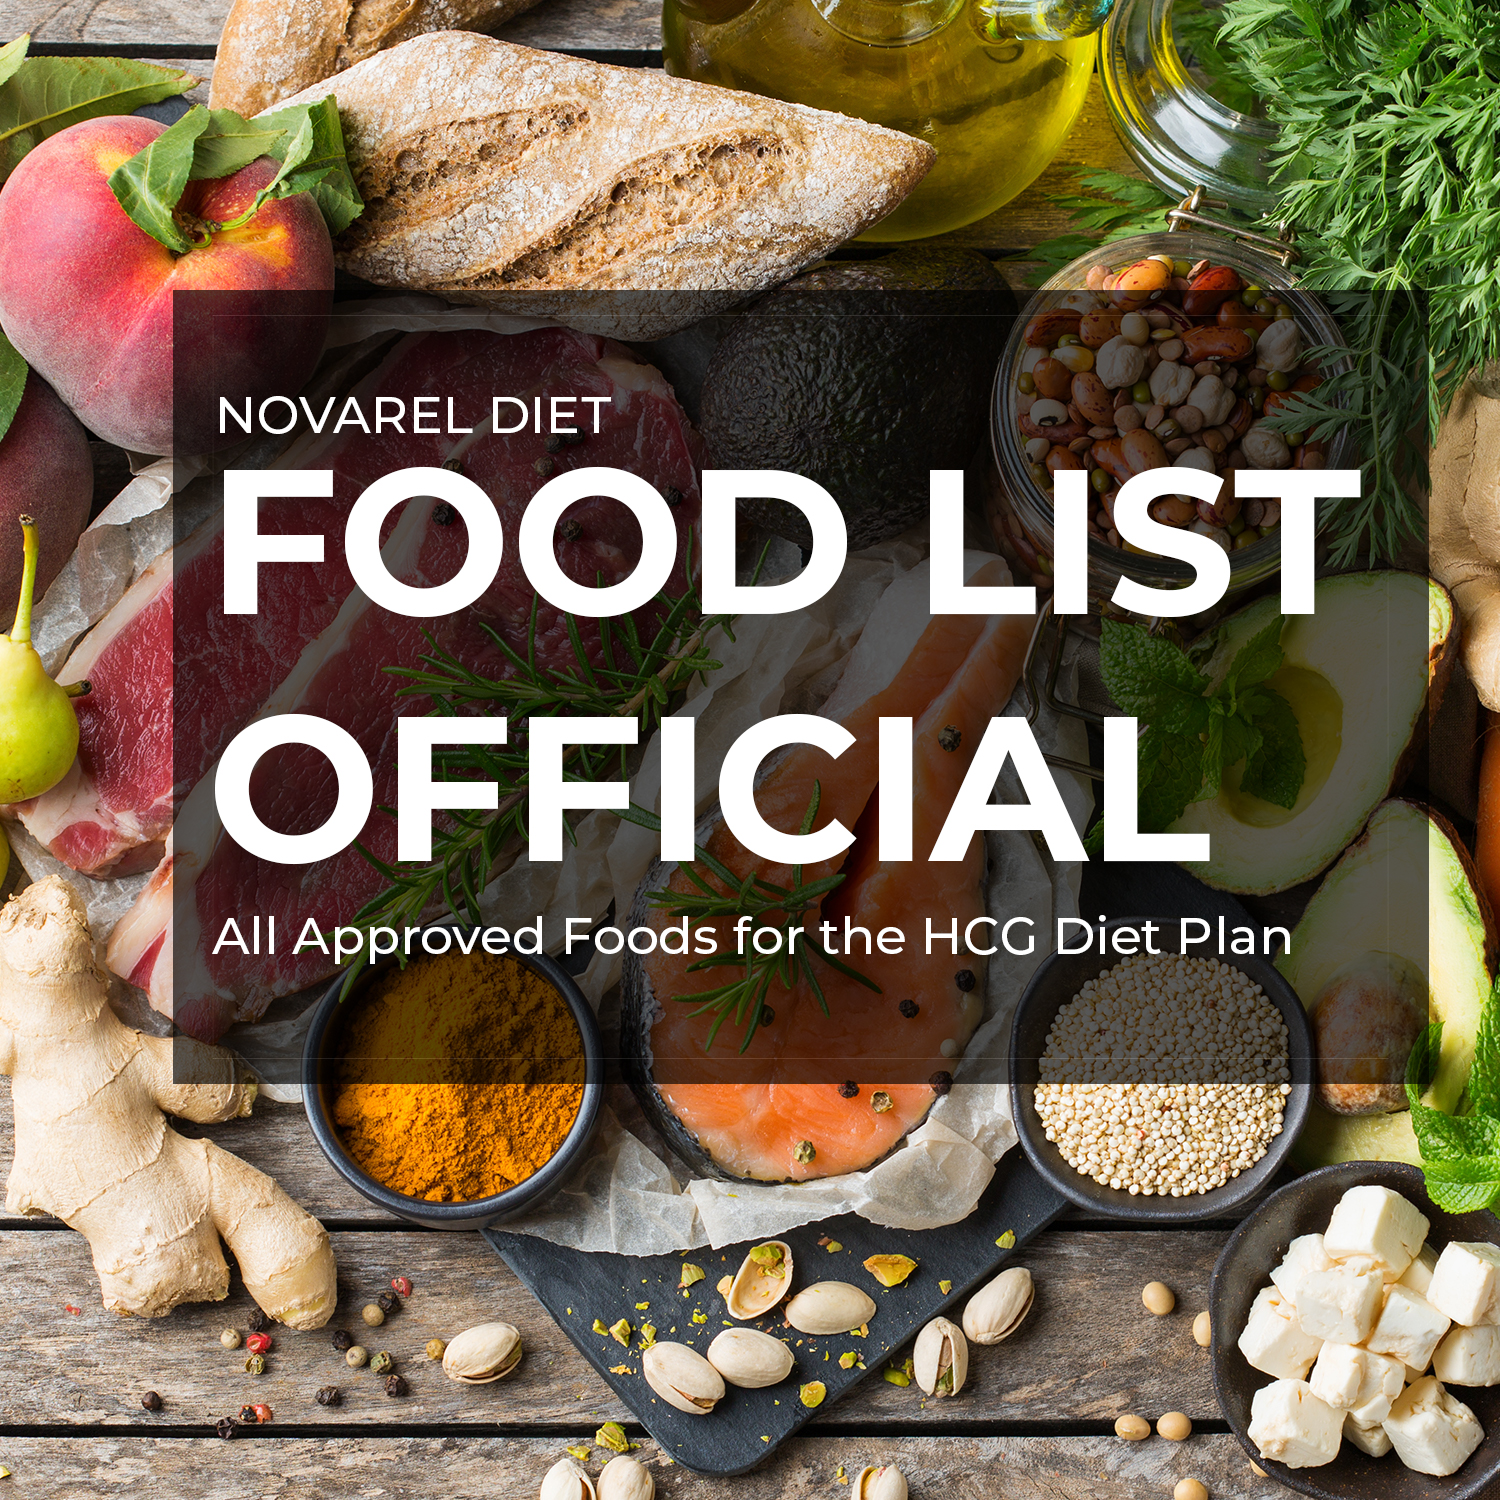 The OFFICIAL Novarel Diet Food List